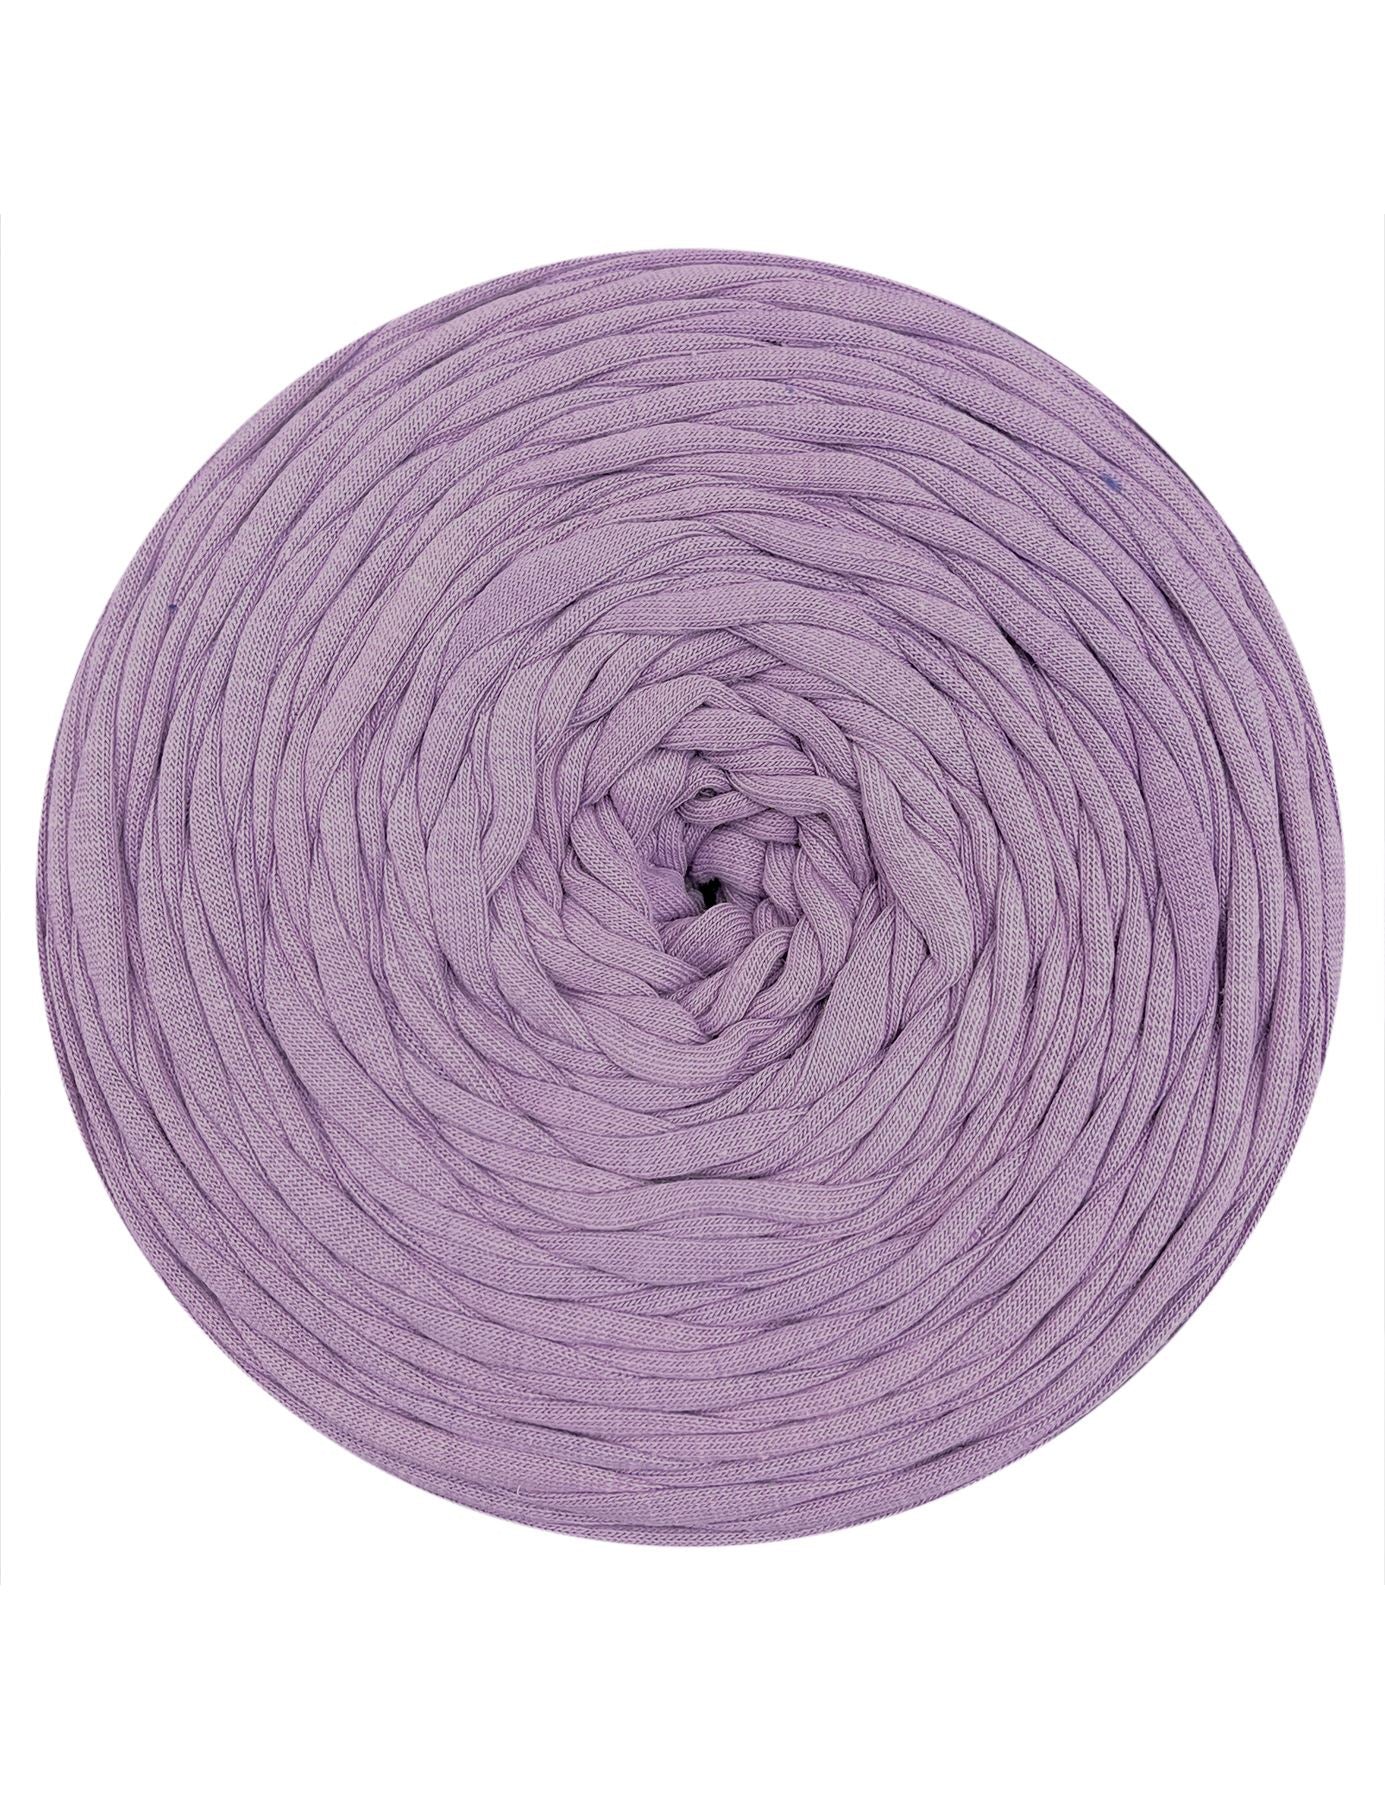 Deep lilac t-shirt yarn (100-120m)